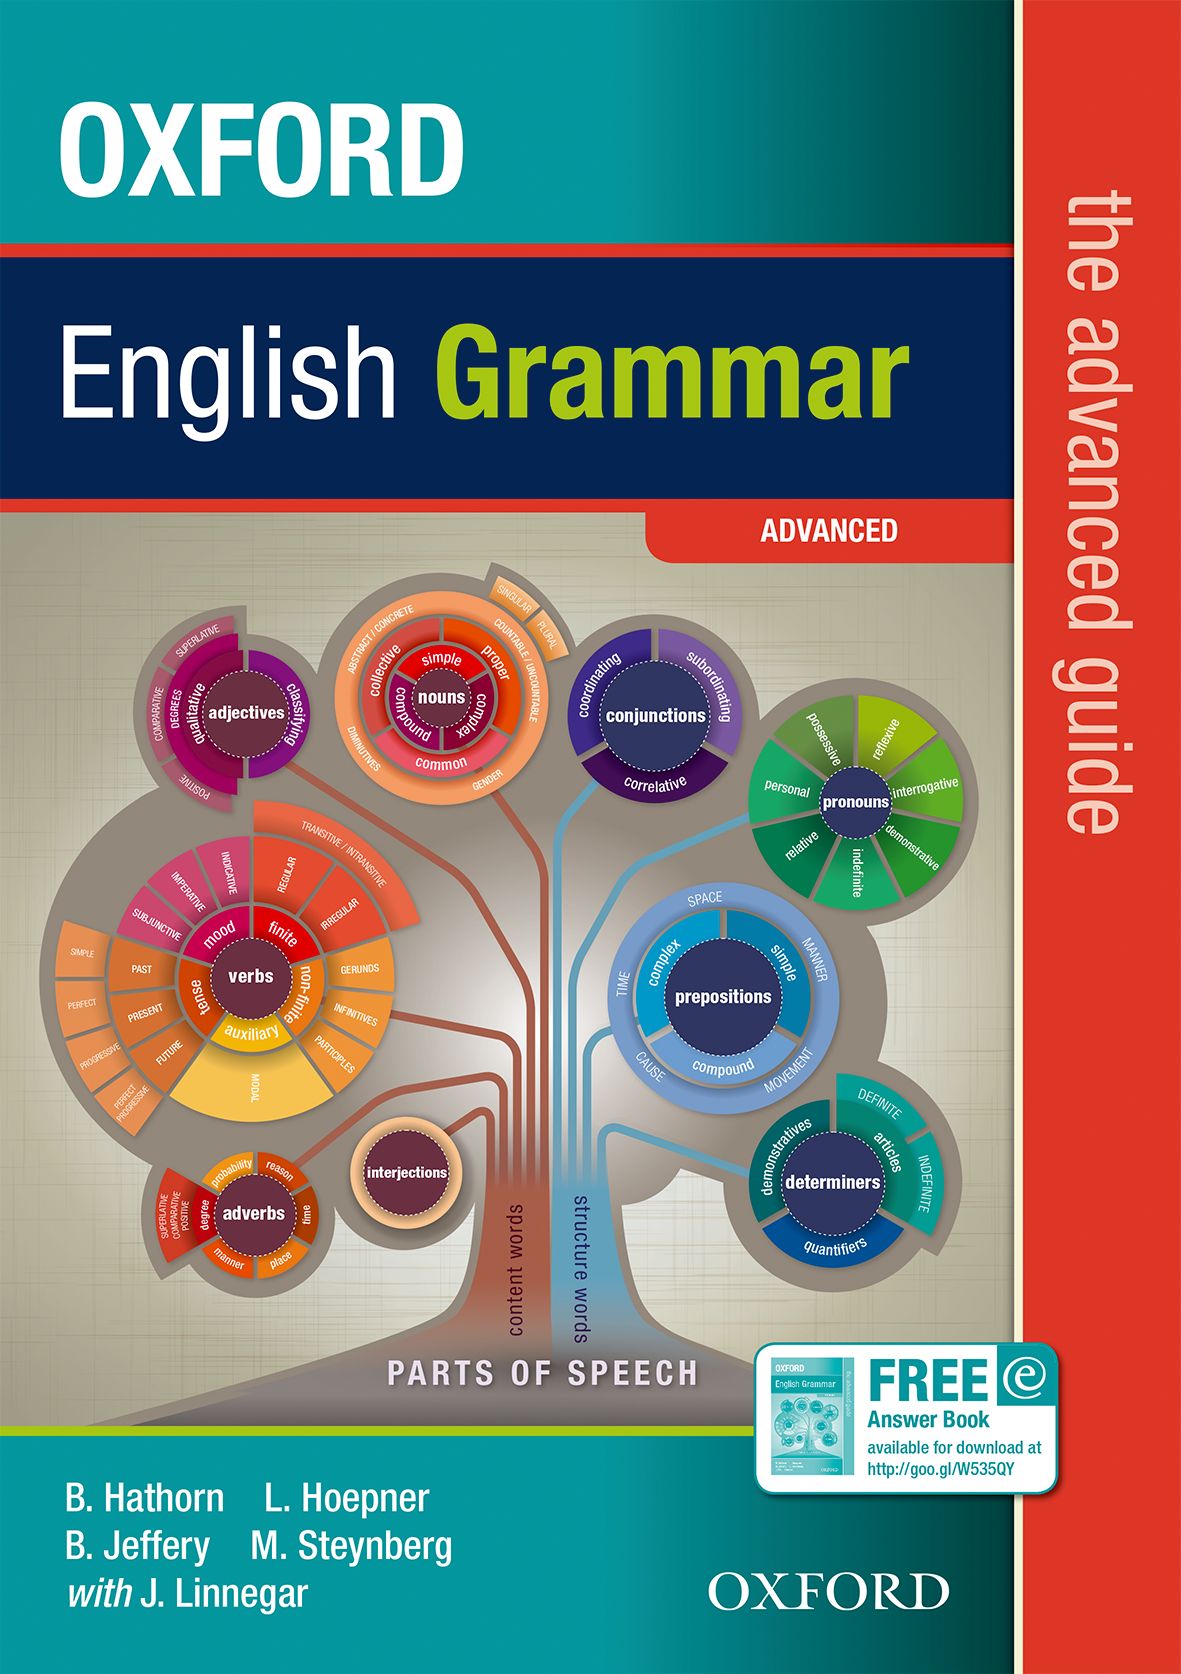 Oxford English Grammar: The Advanced Guid